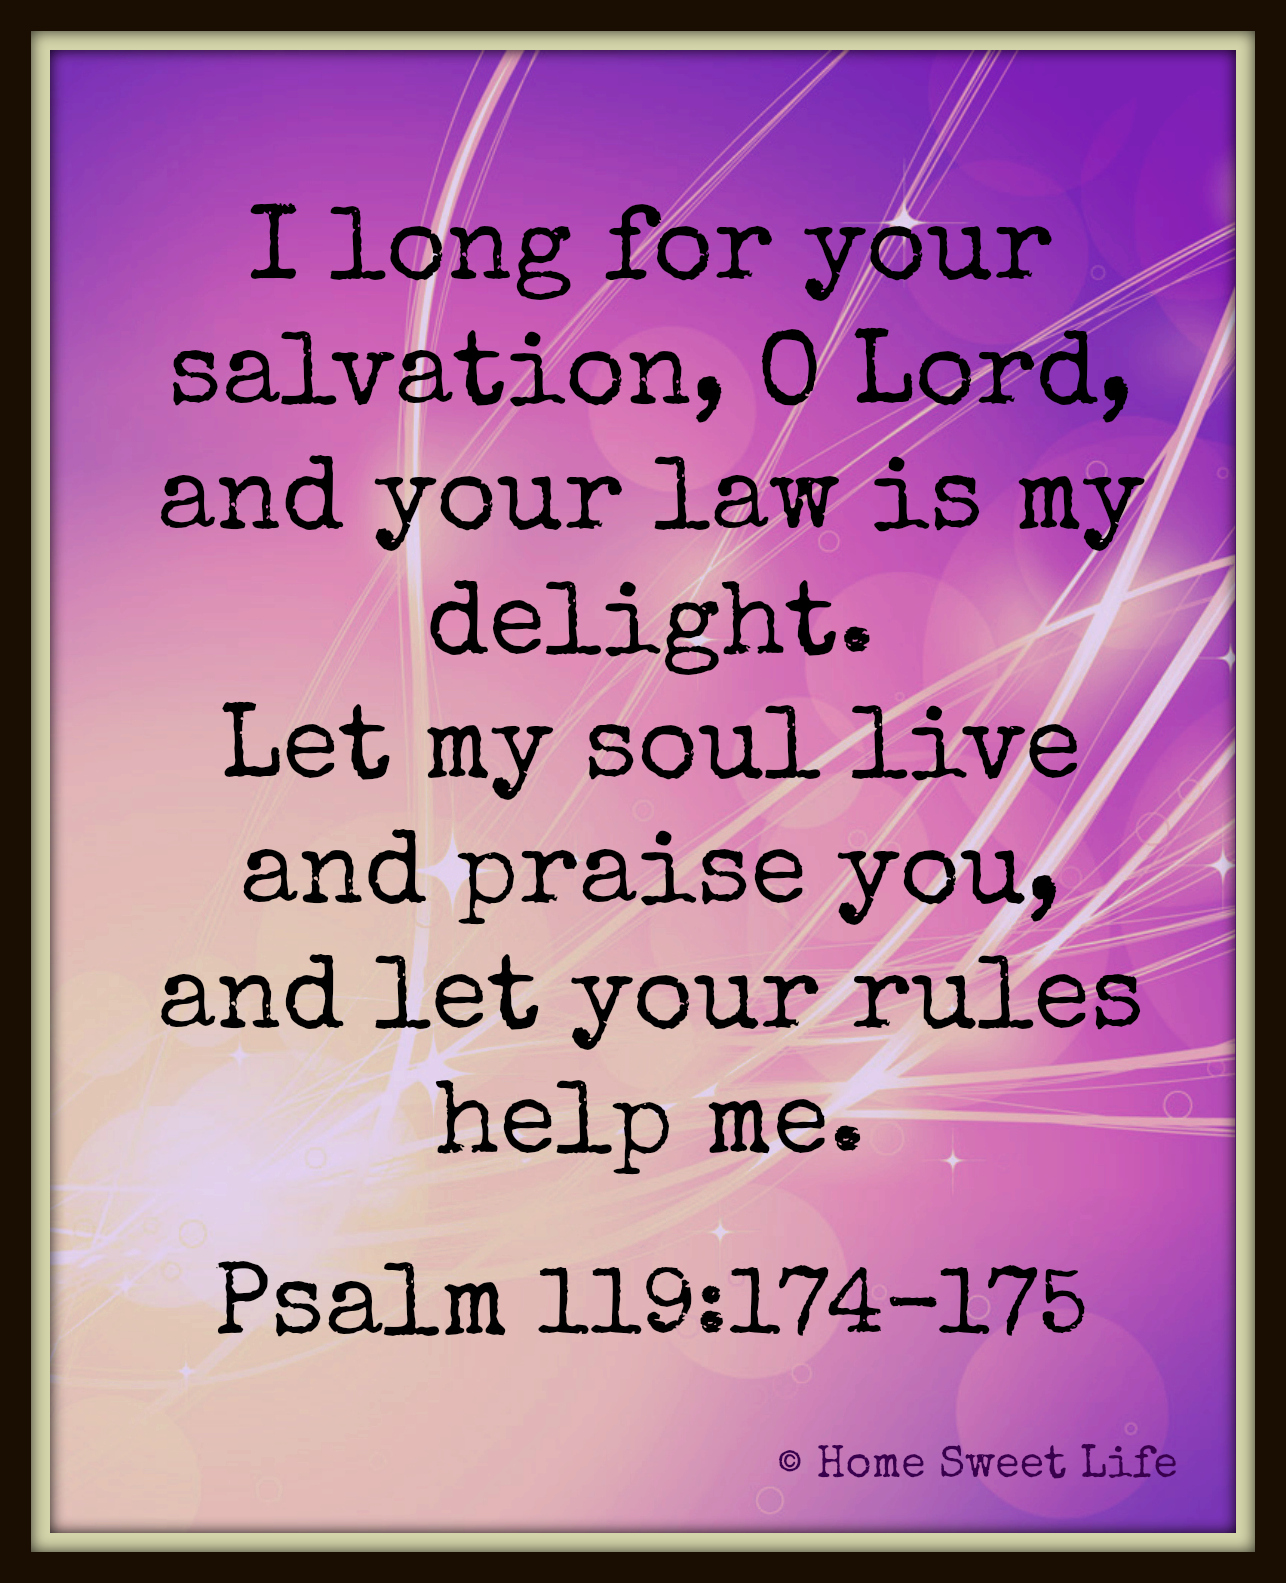 Psalm 119:174-175